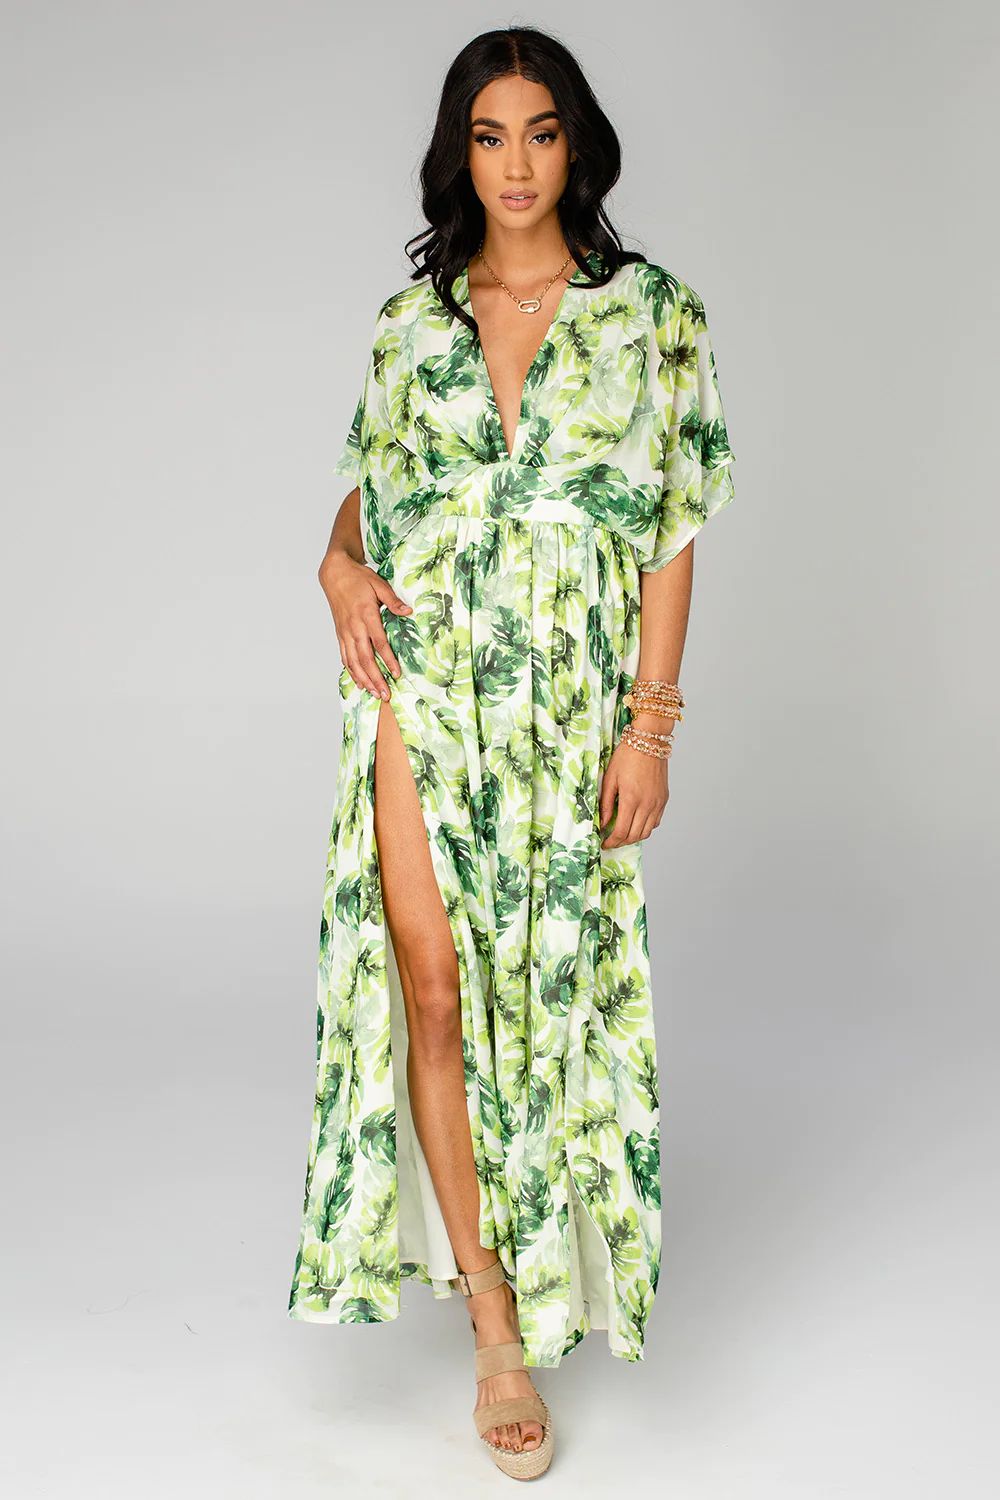 Evelyn Short Sleeve Maxi Dress - Maui | BuddyLove